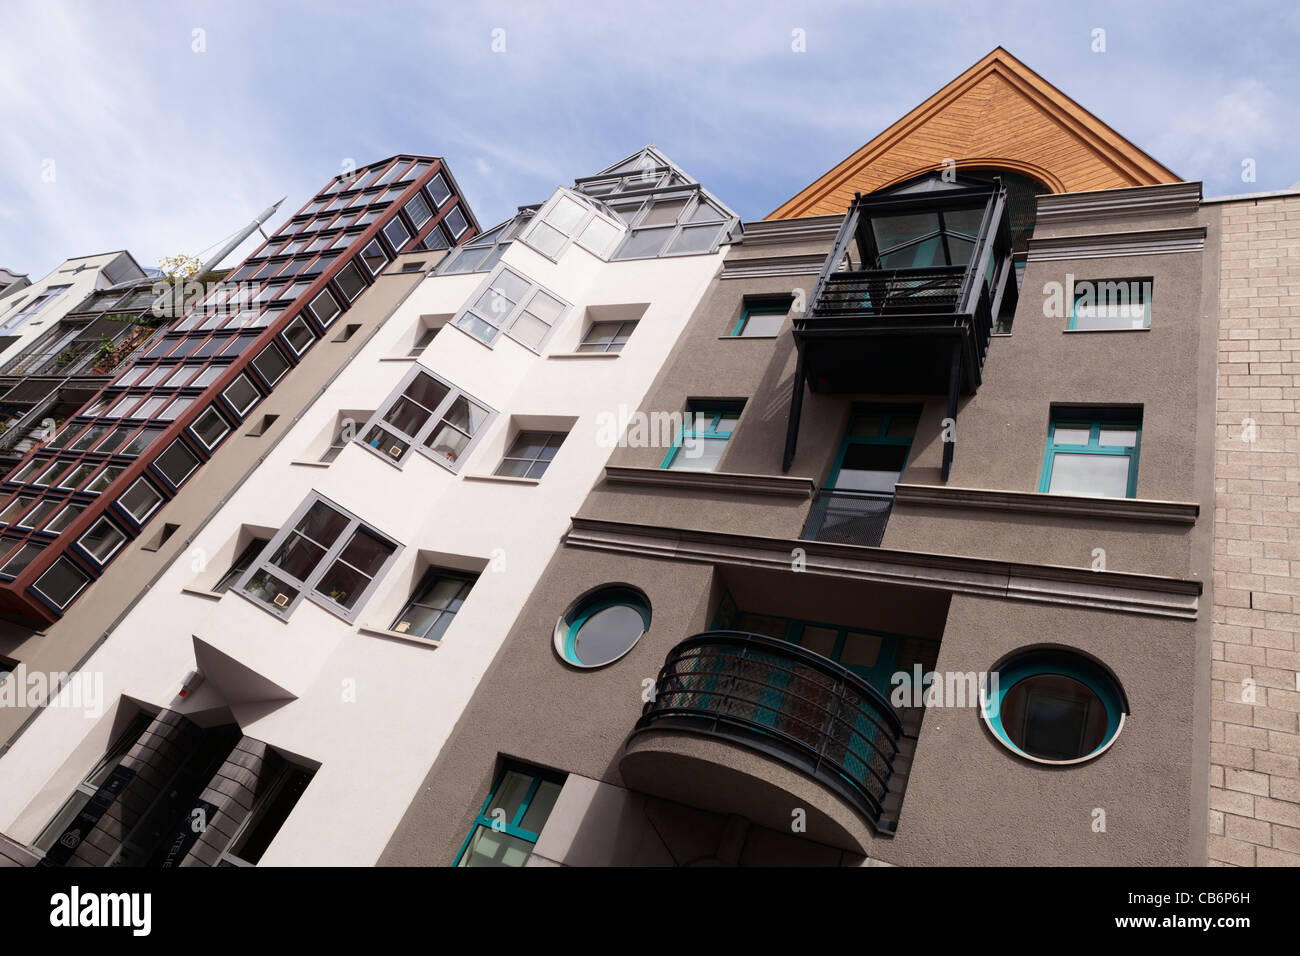 Modern gestaltet Stadthäuser auf Saalgaase - Frankfurt am Main, Deutschland. Stockfoto